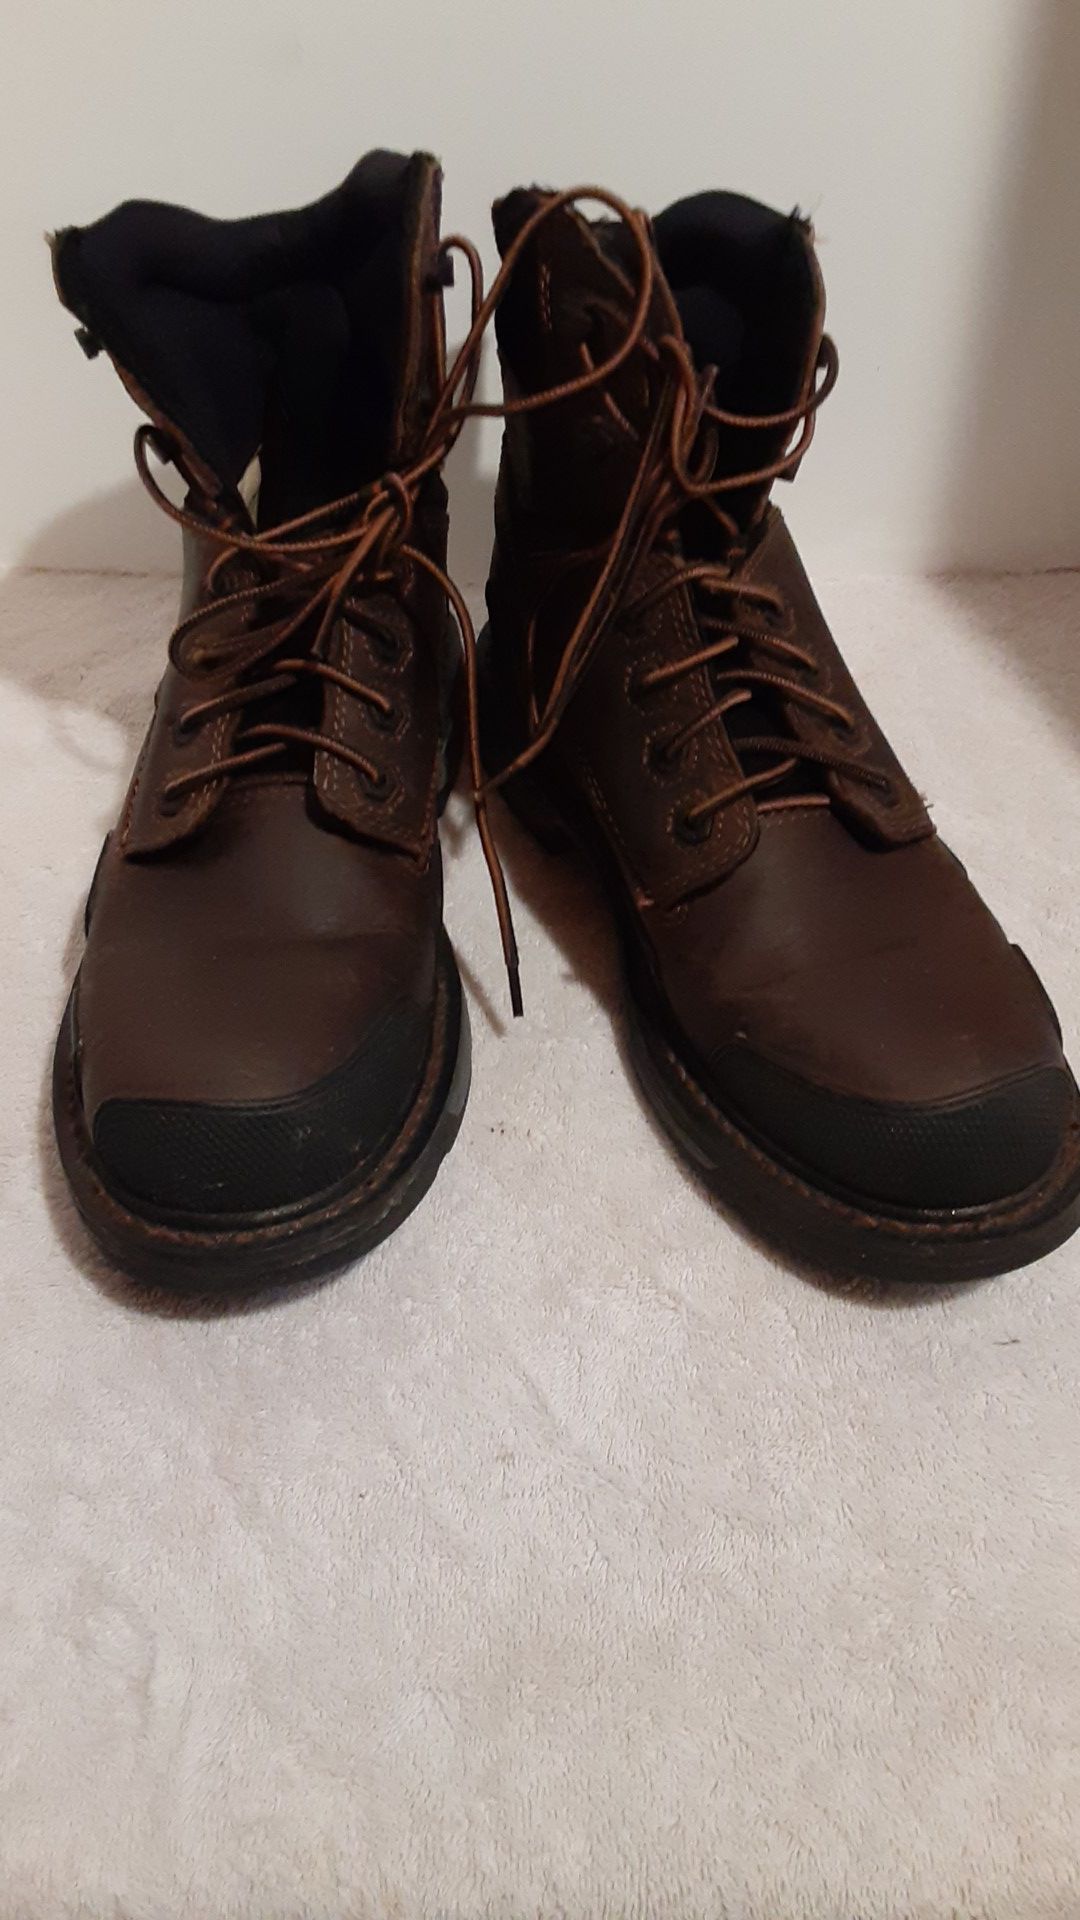 Ariat Work Boots Size 8.5 M